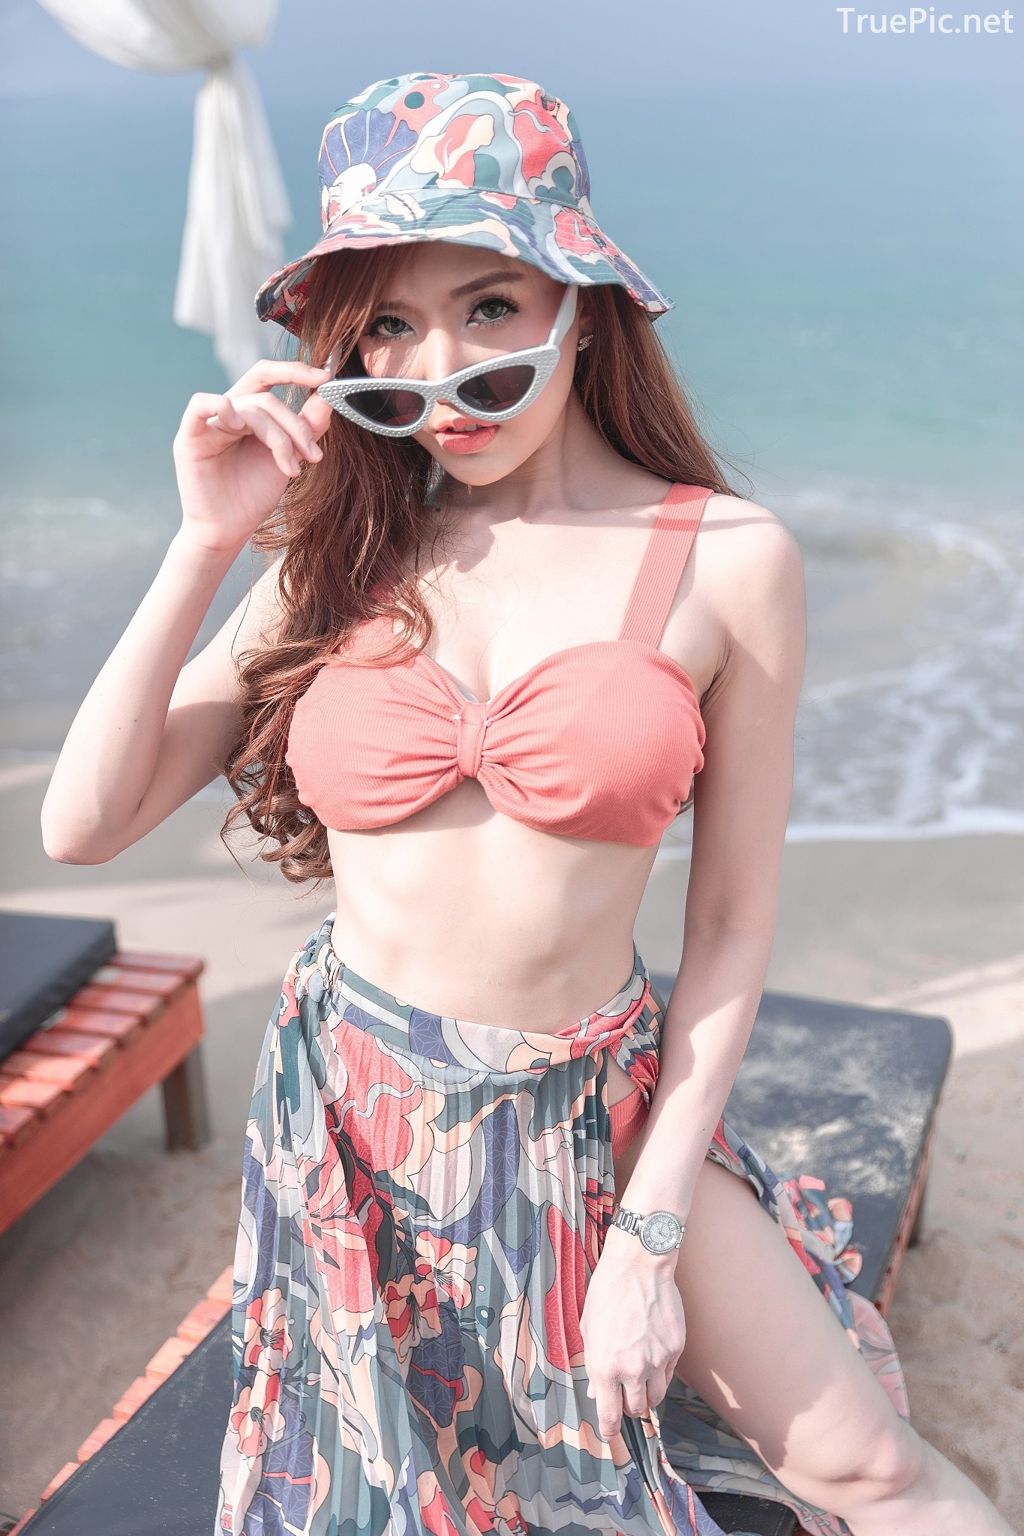 Thailand model - I'nam Arissara Chaidech - Pink Bikini on the beach - TruePic.net - Picture 23